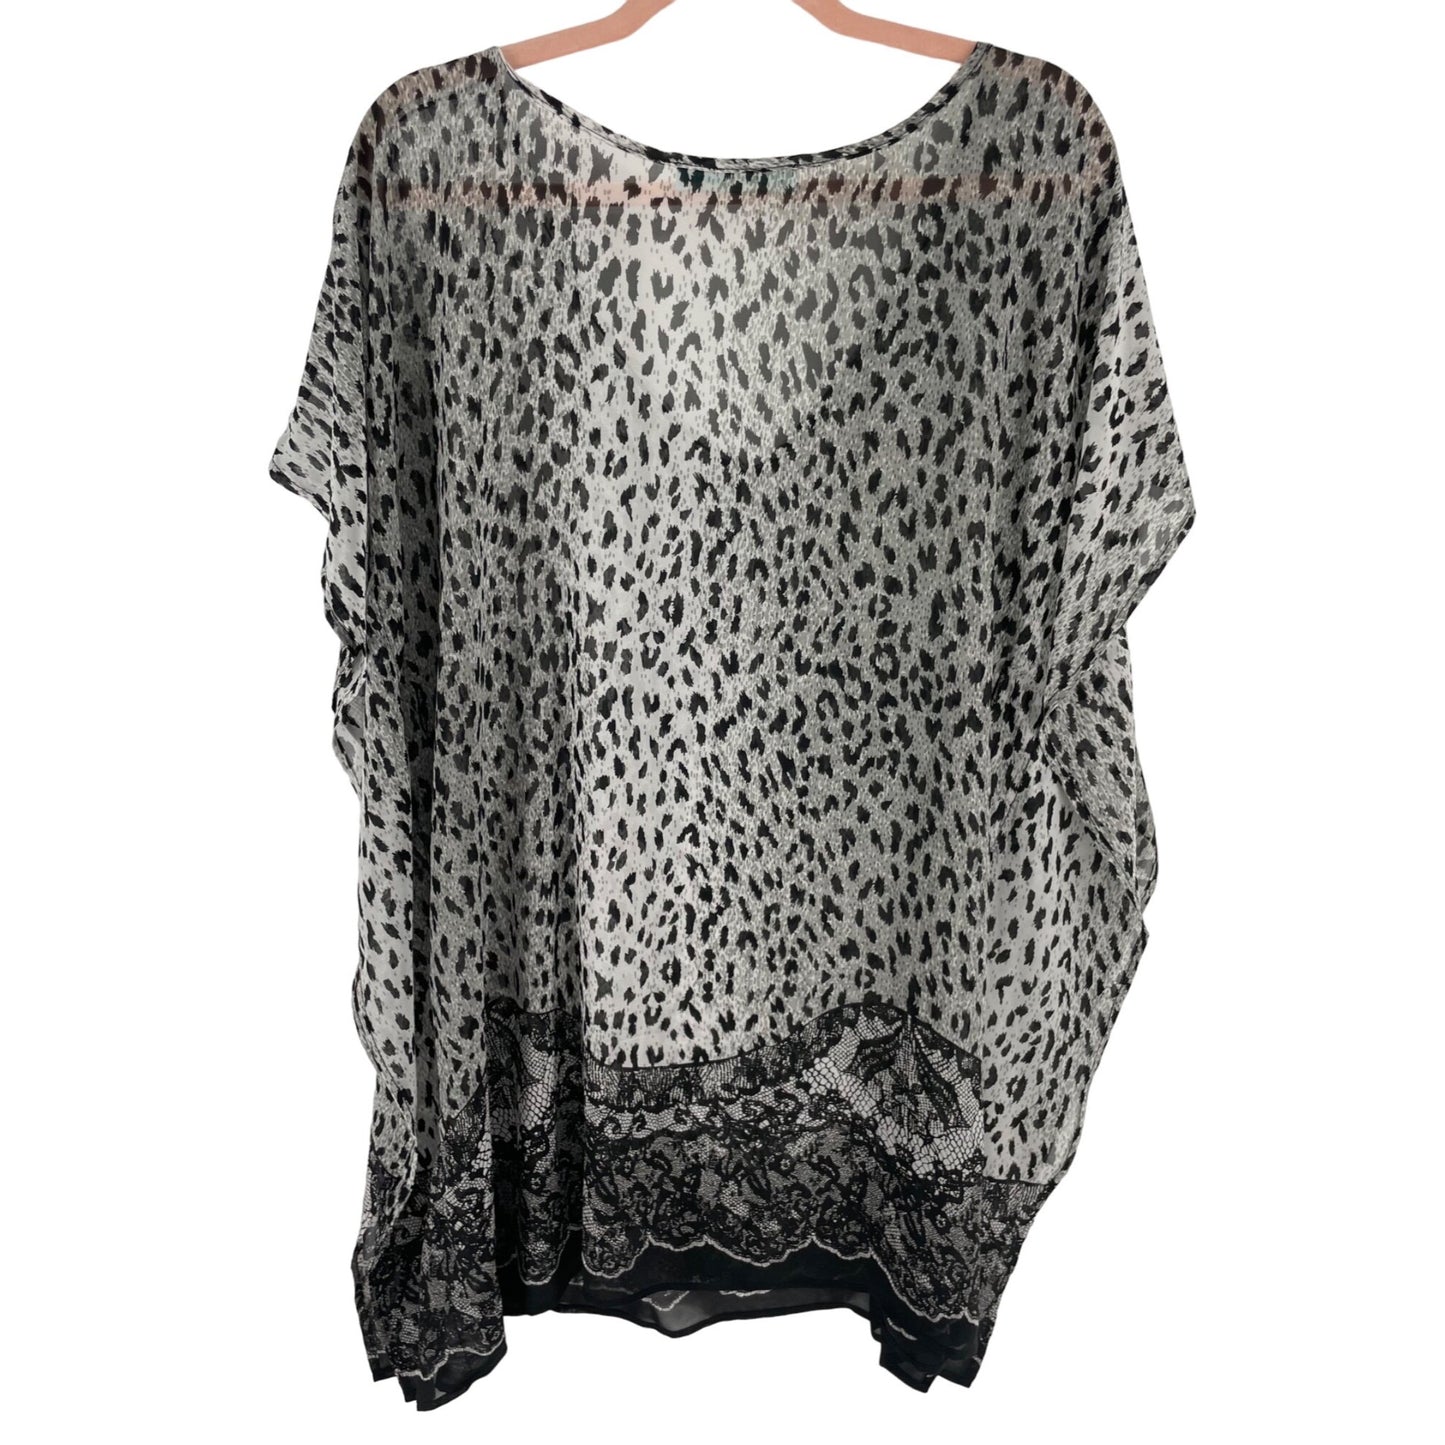 Soho Hearts Women's Size XL Black & White Leopard Print Lace Beach Cover-Up